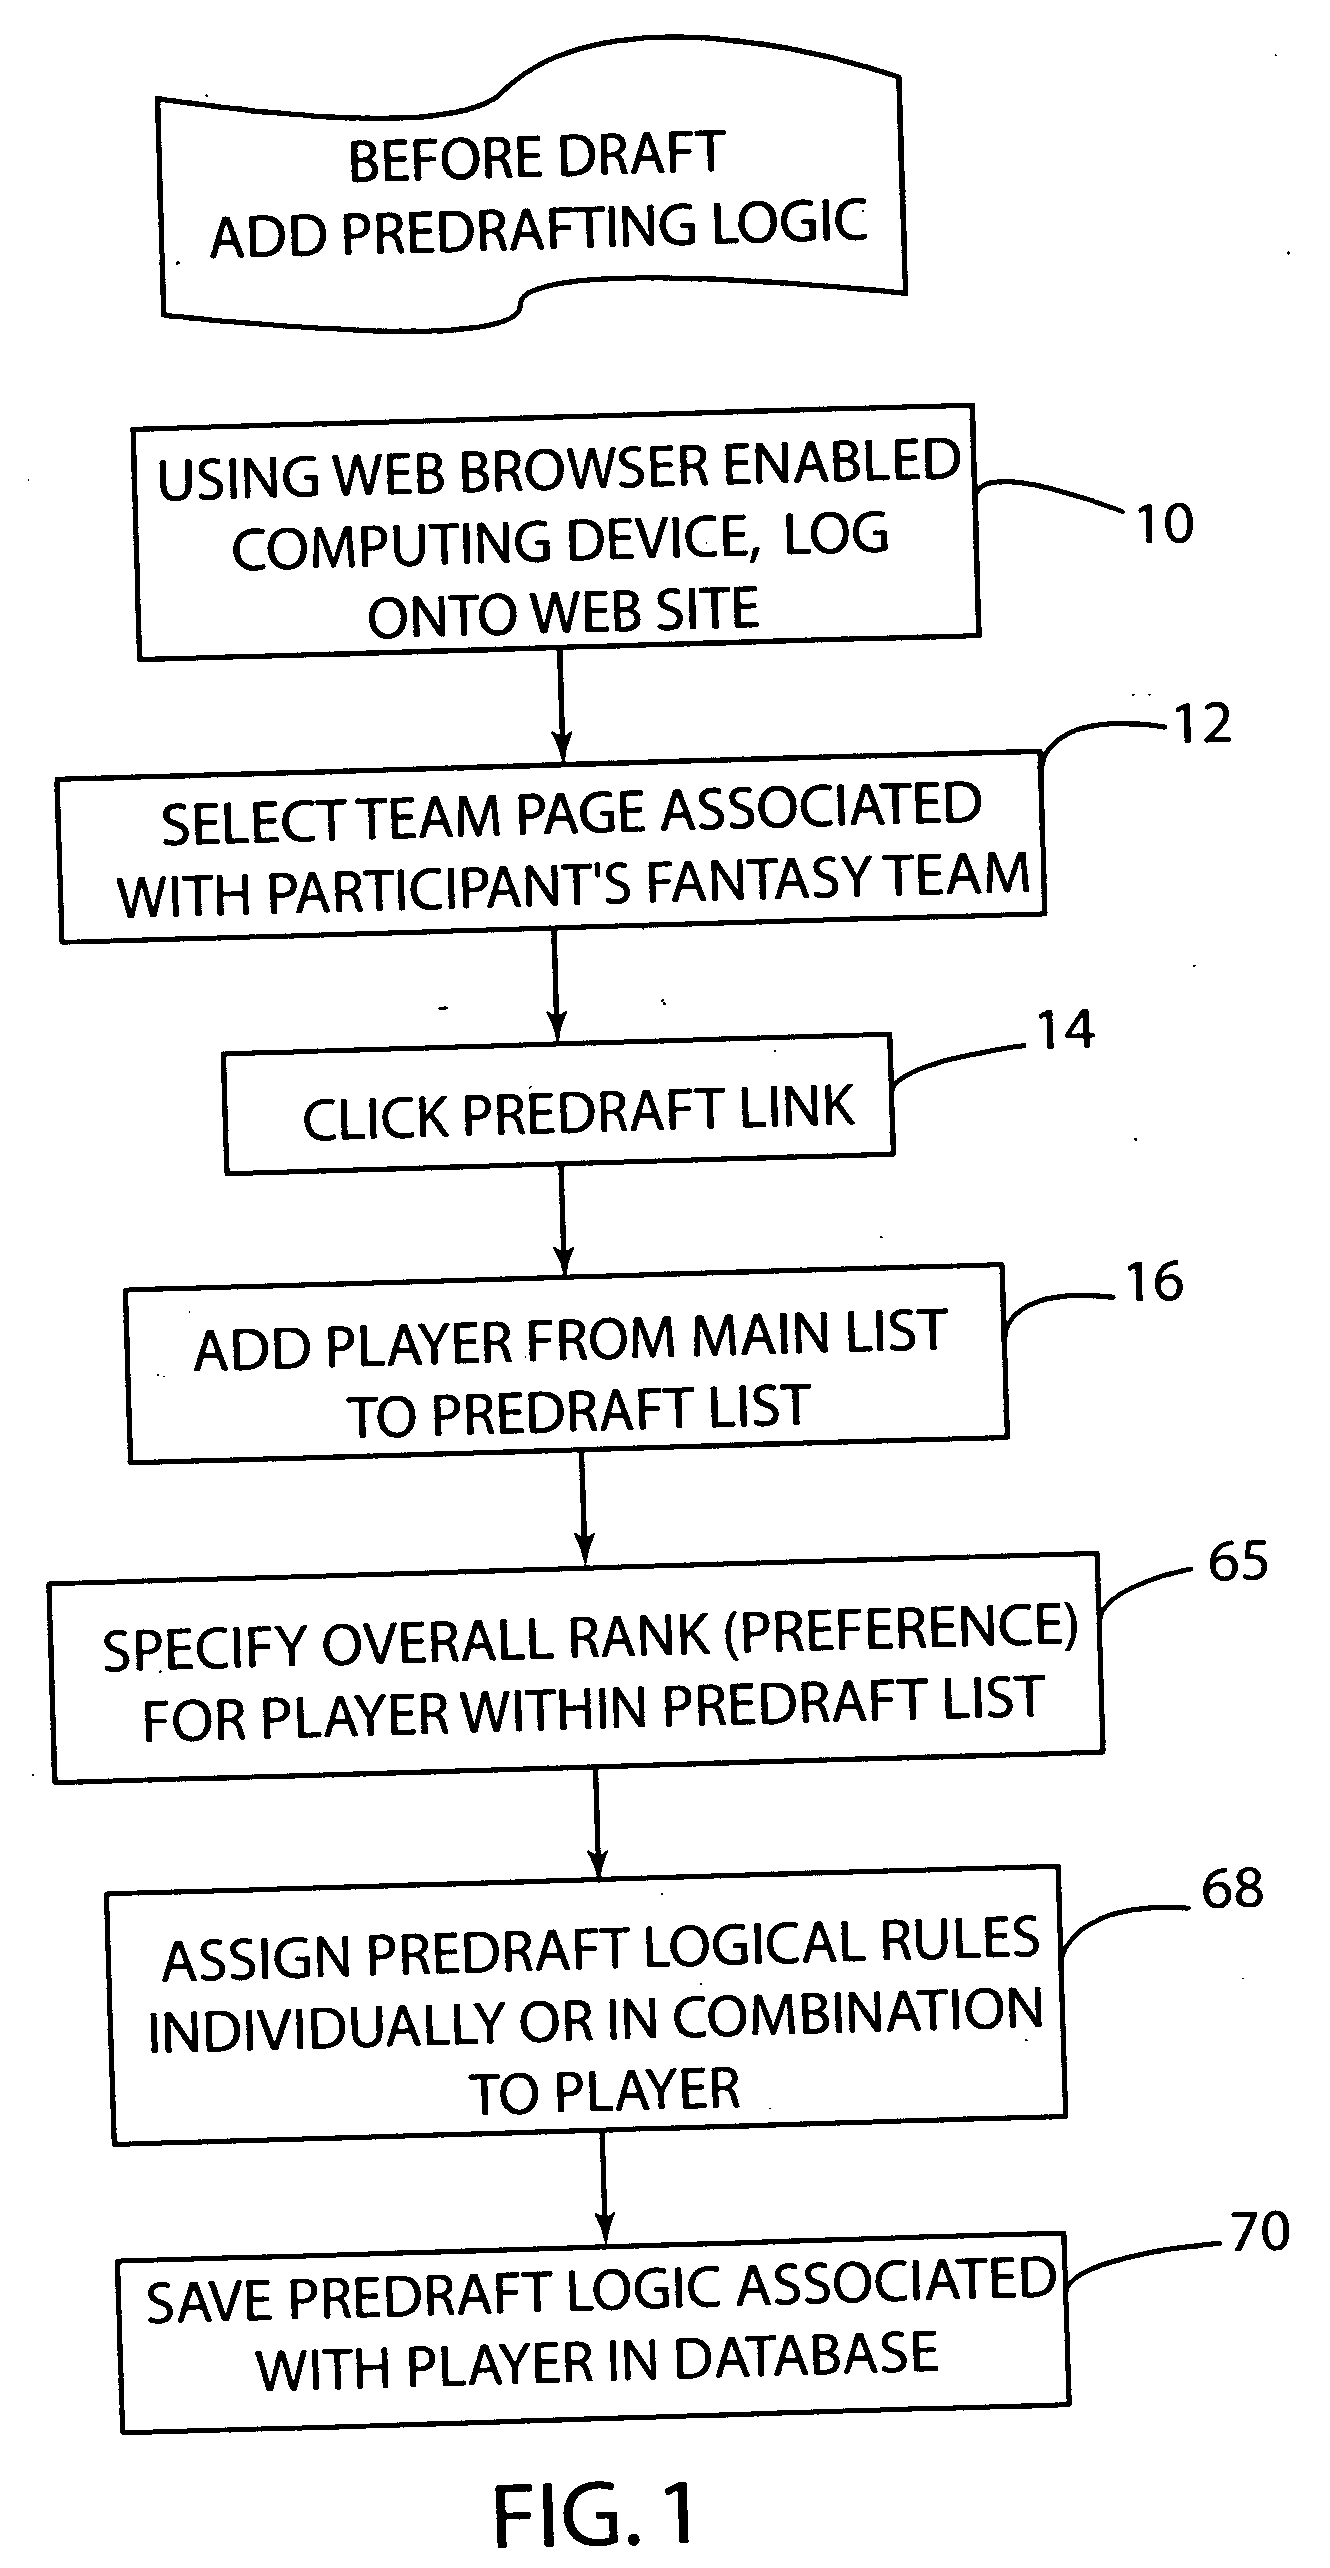 Fantasy sports league pre-draft logic method